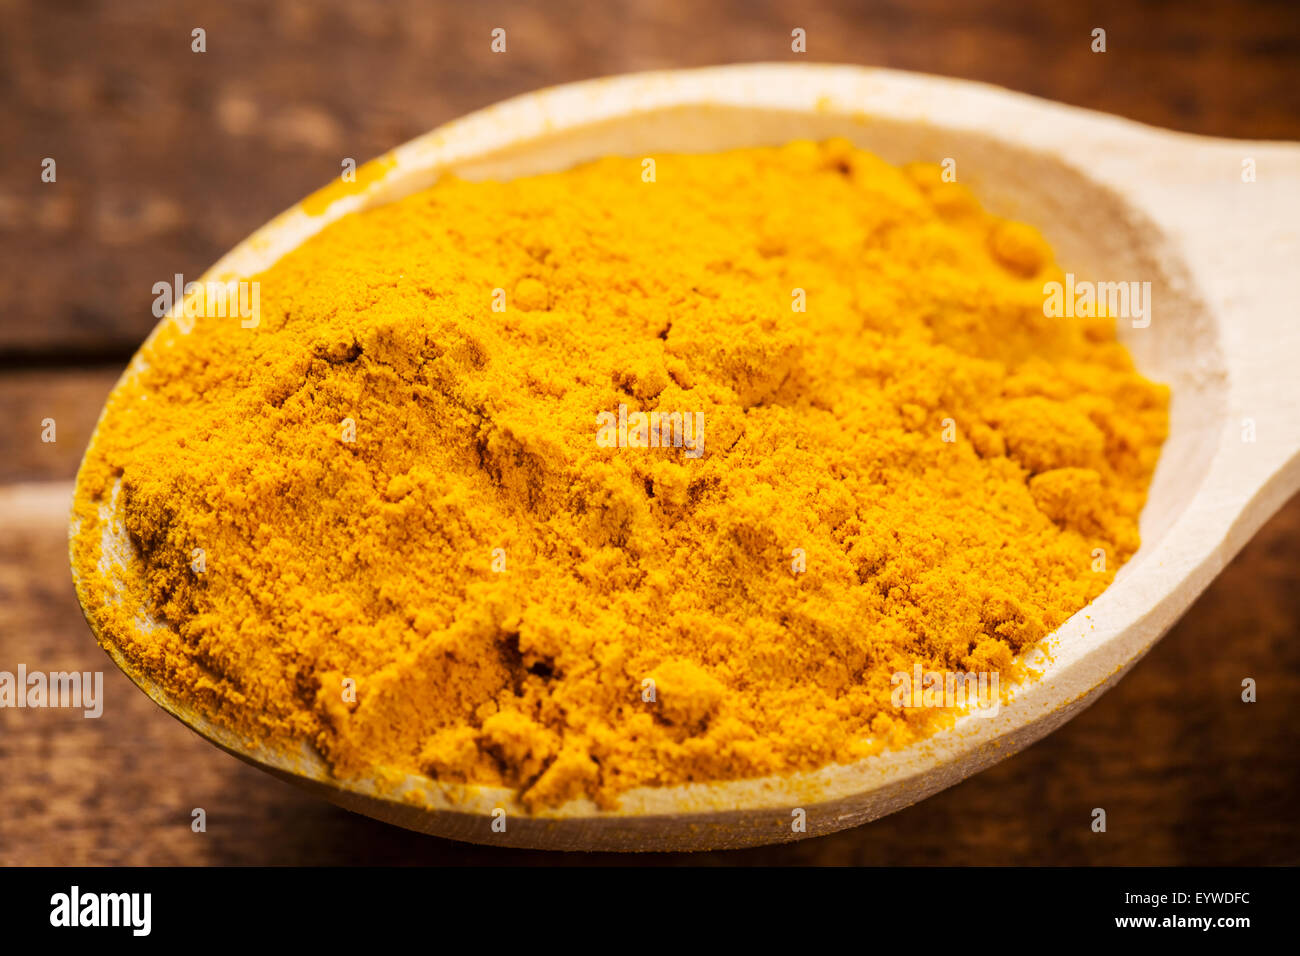 Close up of measuring spoon in pile of organic turmeric (curcuma) powder Stock Photo